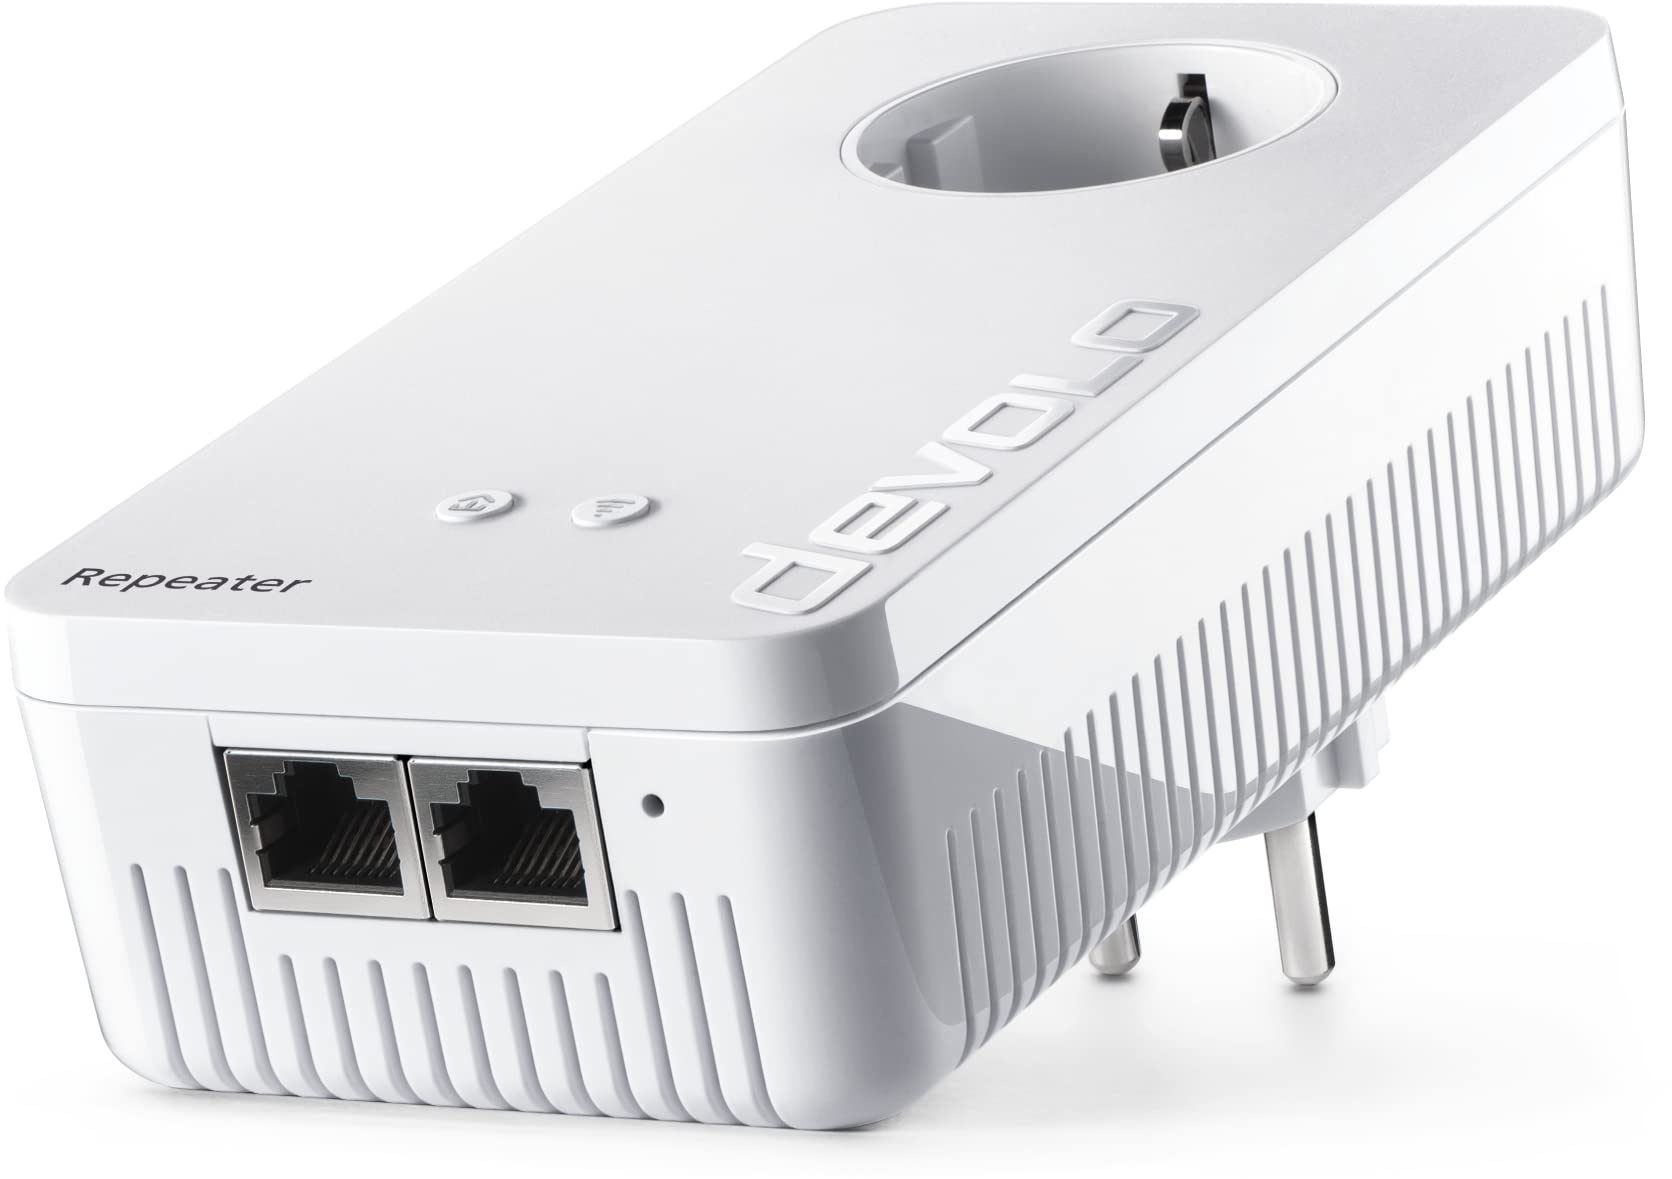 Devolo 8705 WiFi Repeater+ AC - Dual-WLAN-Verstärker mit Steckdose (kompatibel mit allen Routern, 1200 Mbit/s, 2 x LAN-Ports, Ap-Modus, Zugangspunkt), Weiß